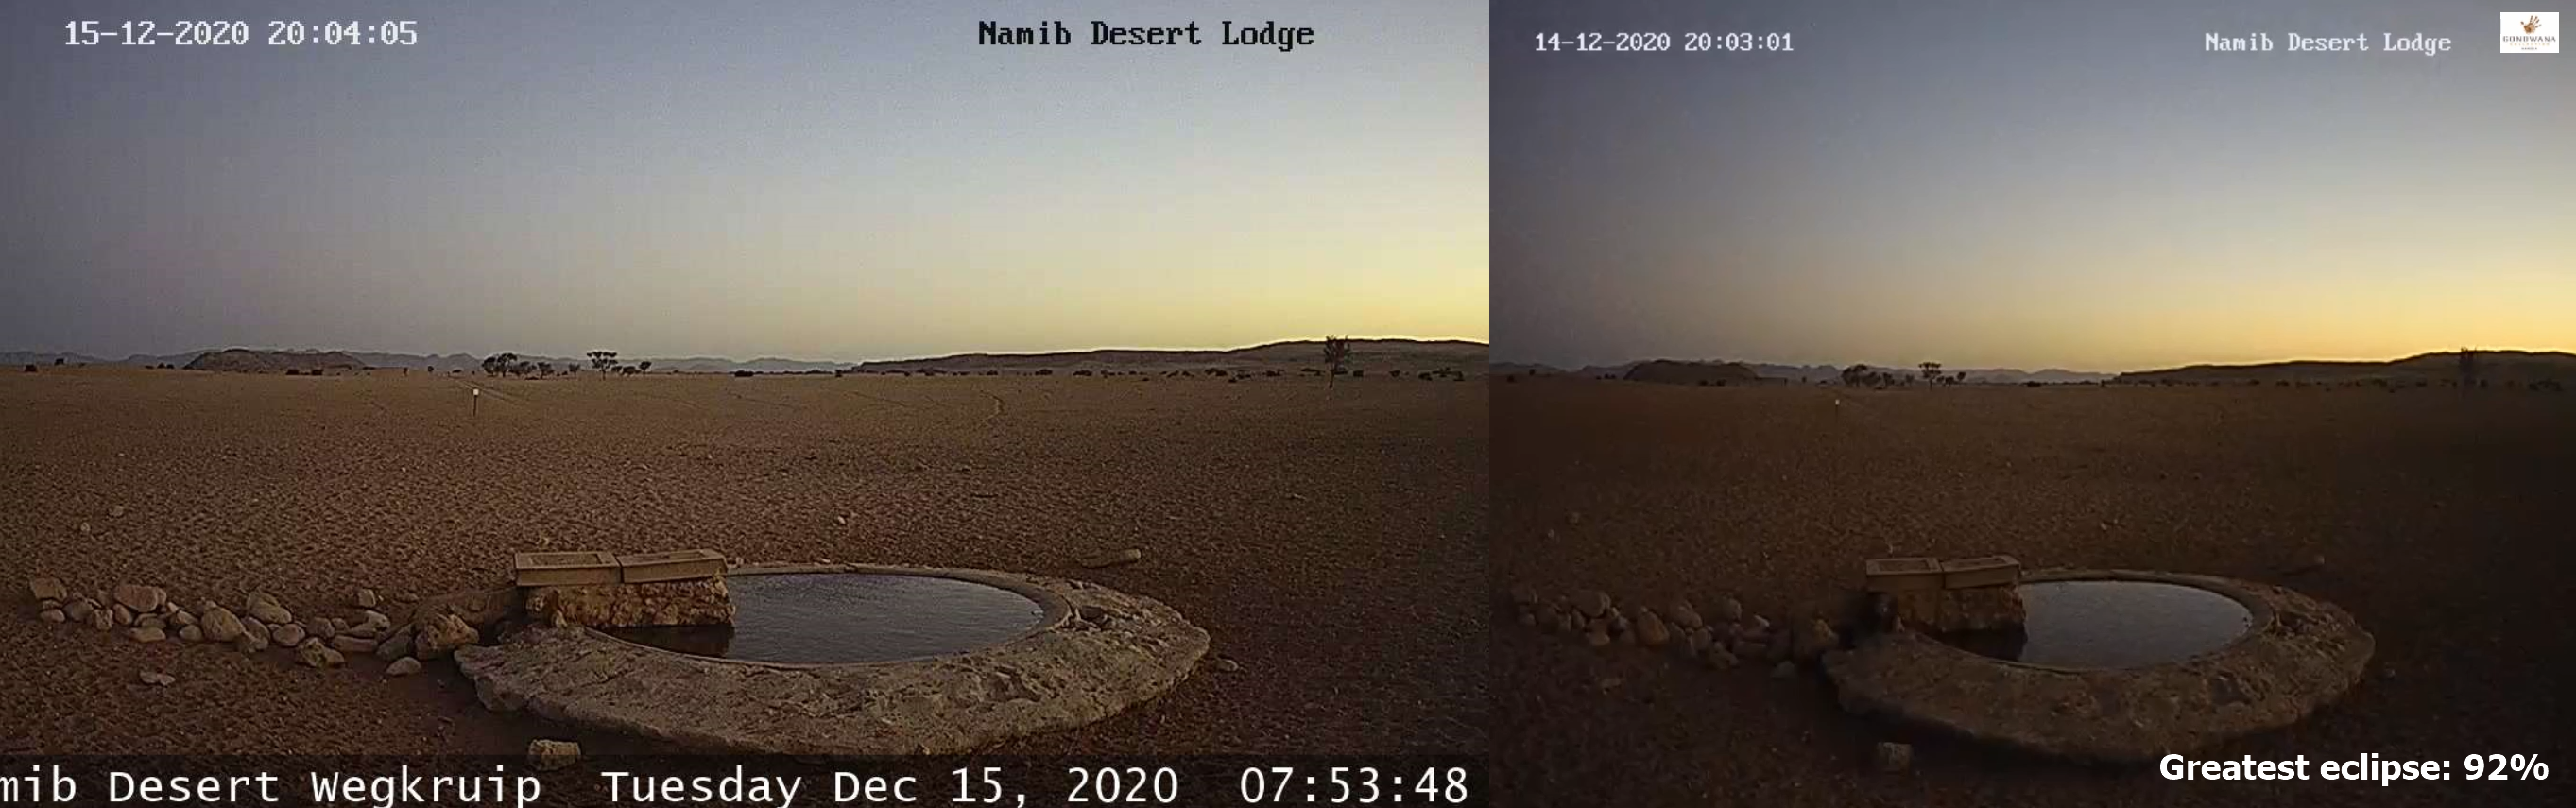 Namib Desert Lodge Wegkruip solar eclipse 2020